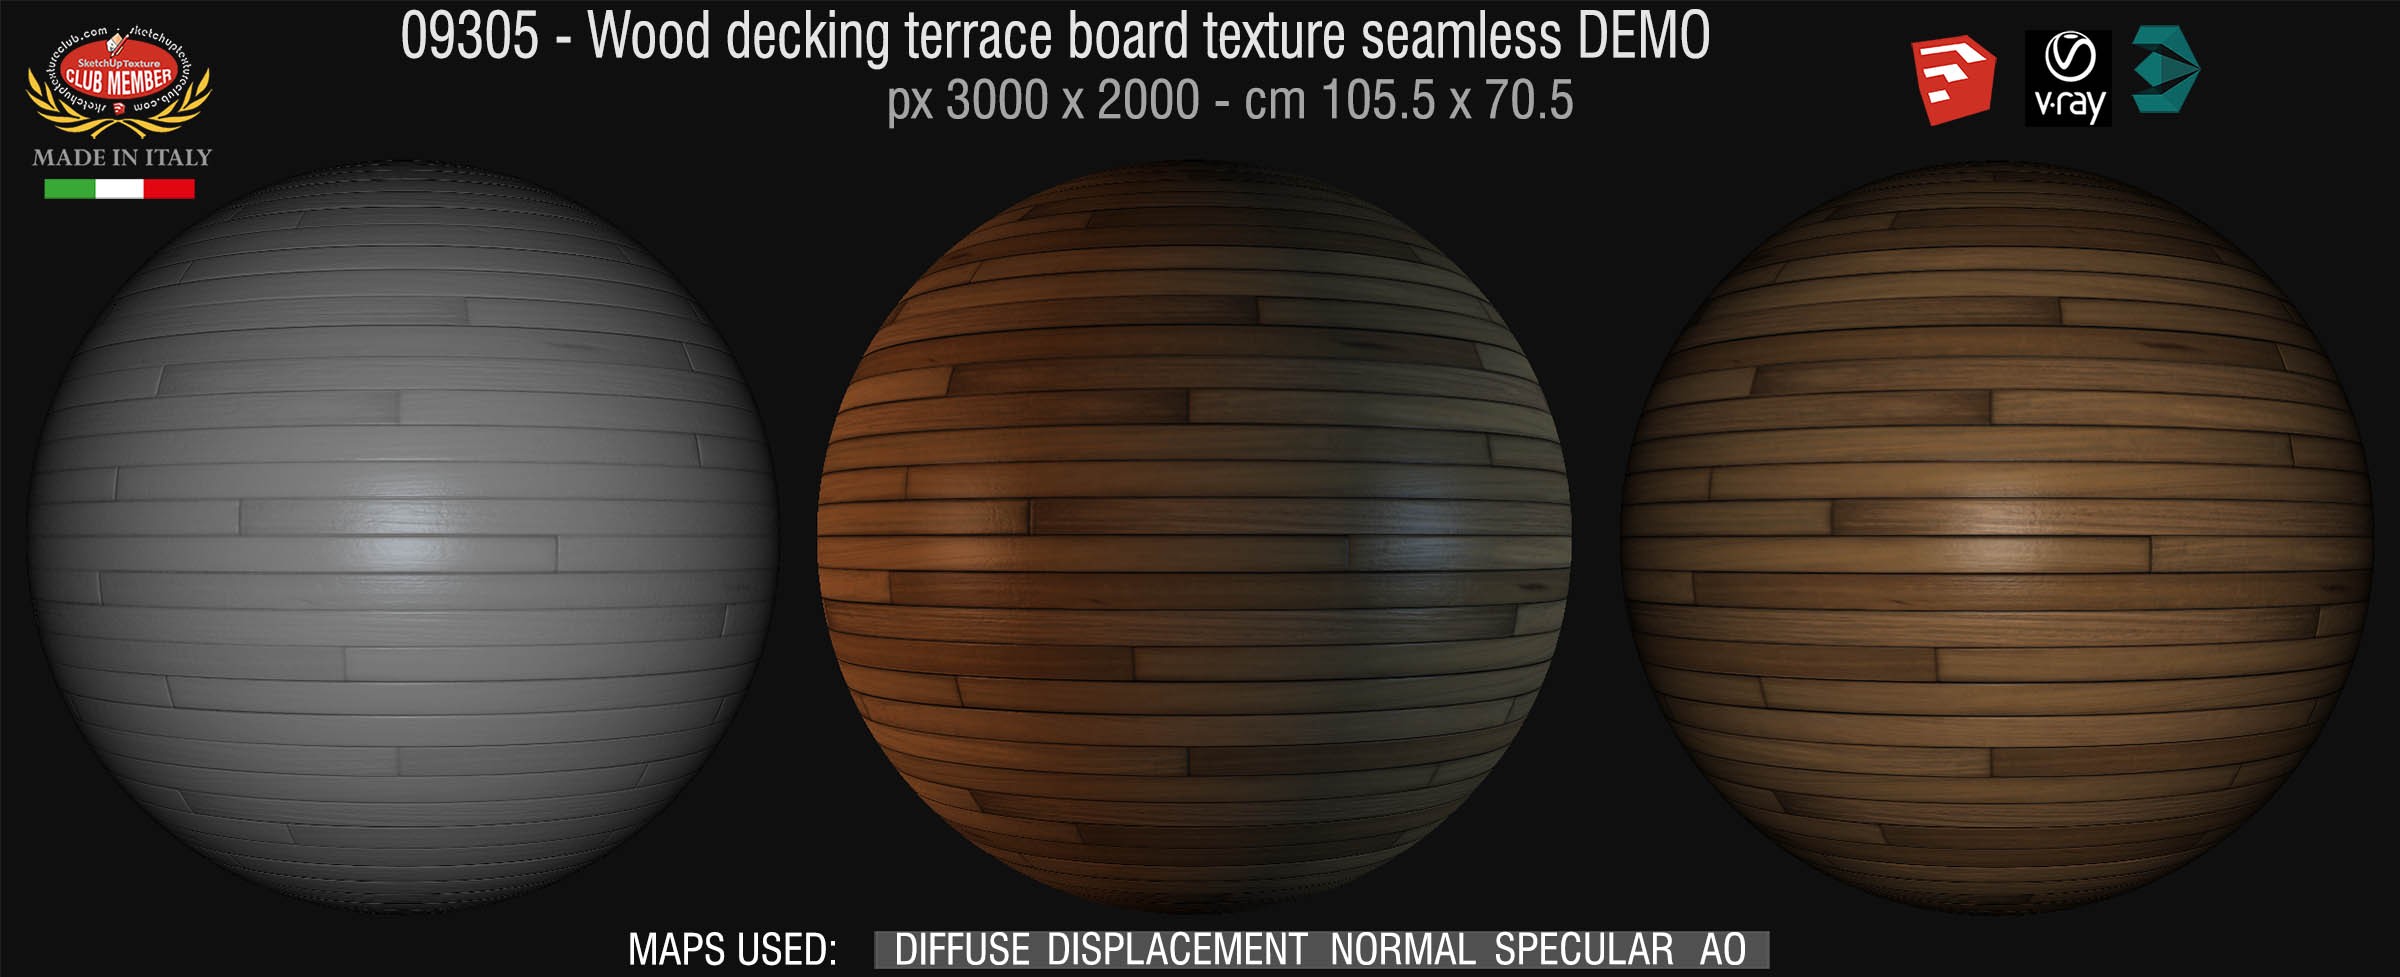 09305 HR Wood decking terrace board texture seamless + maps DEMO